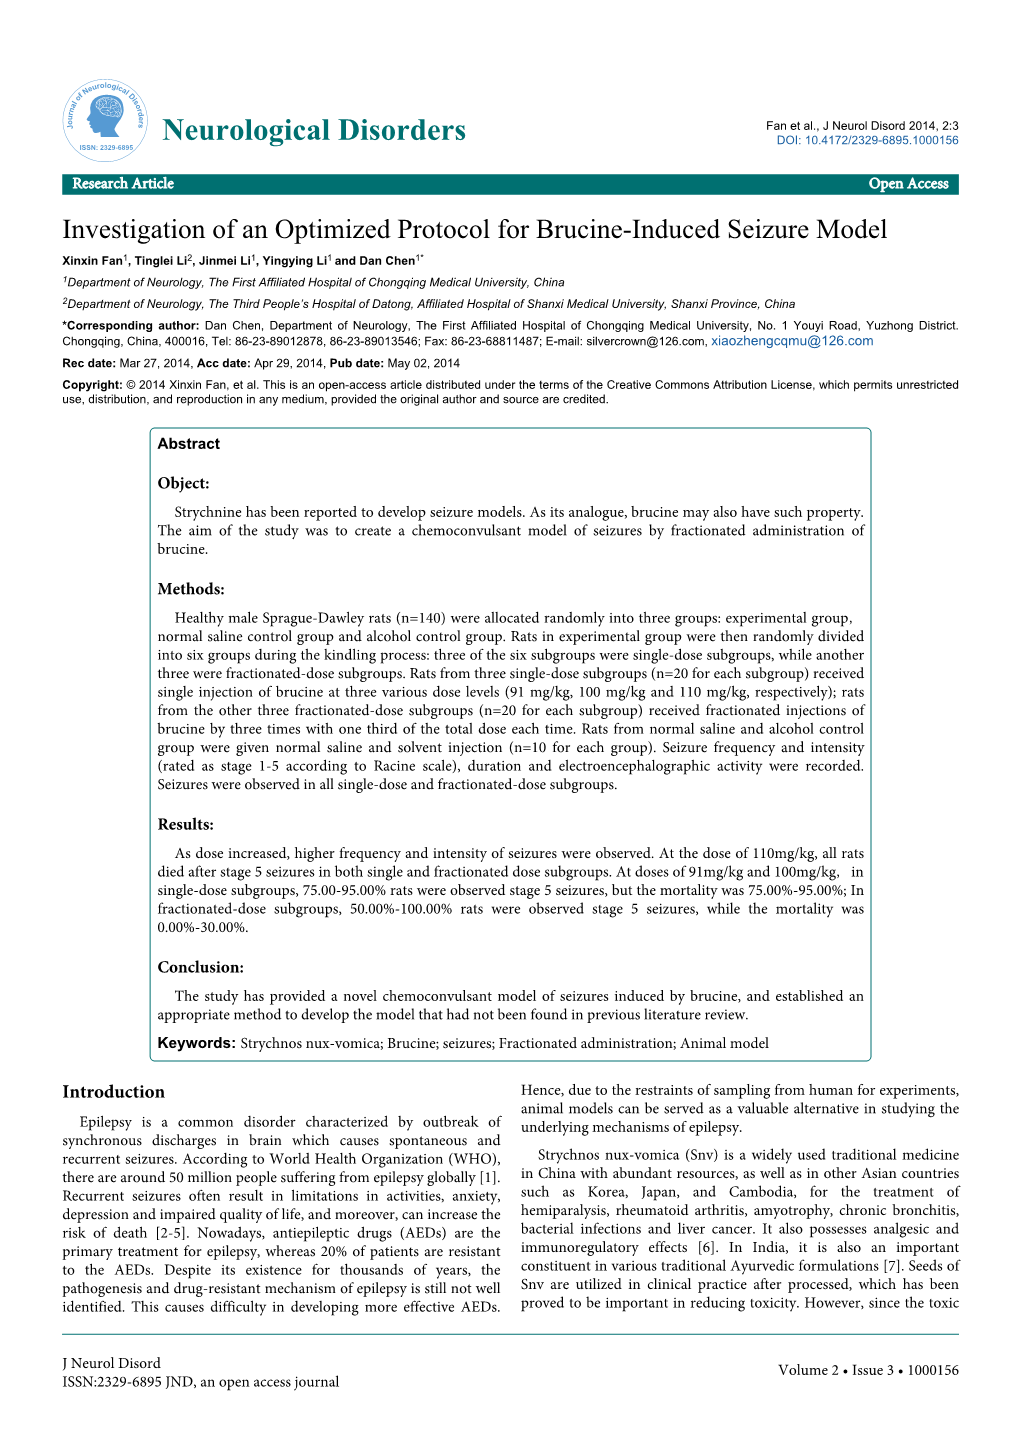 Investigation of an Optimized Protocol for Brucine-Induced Seizure Model